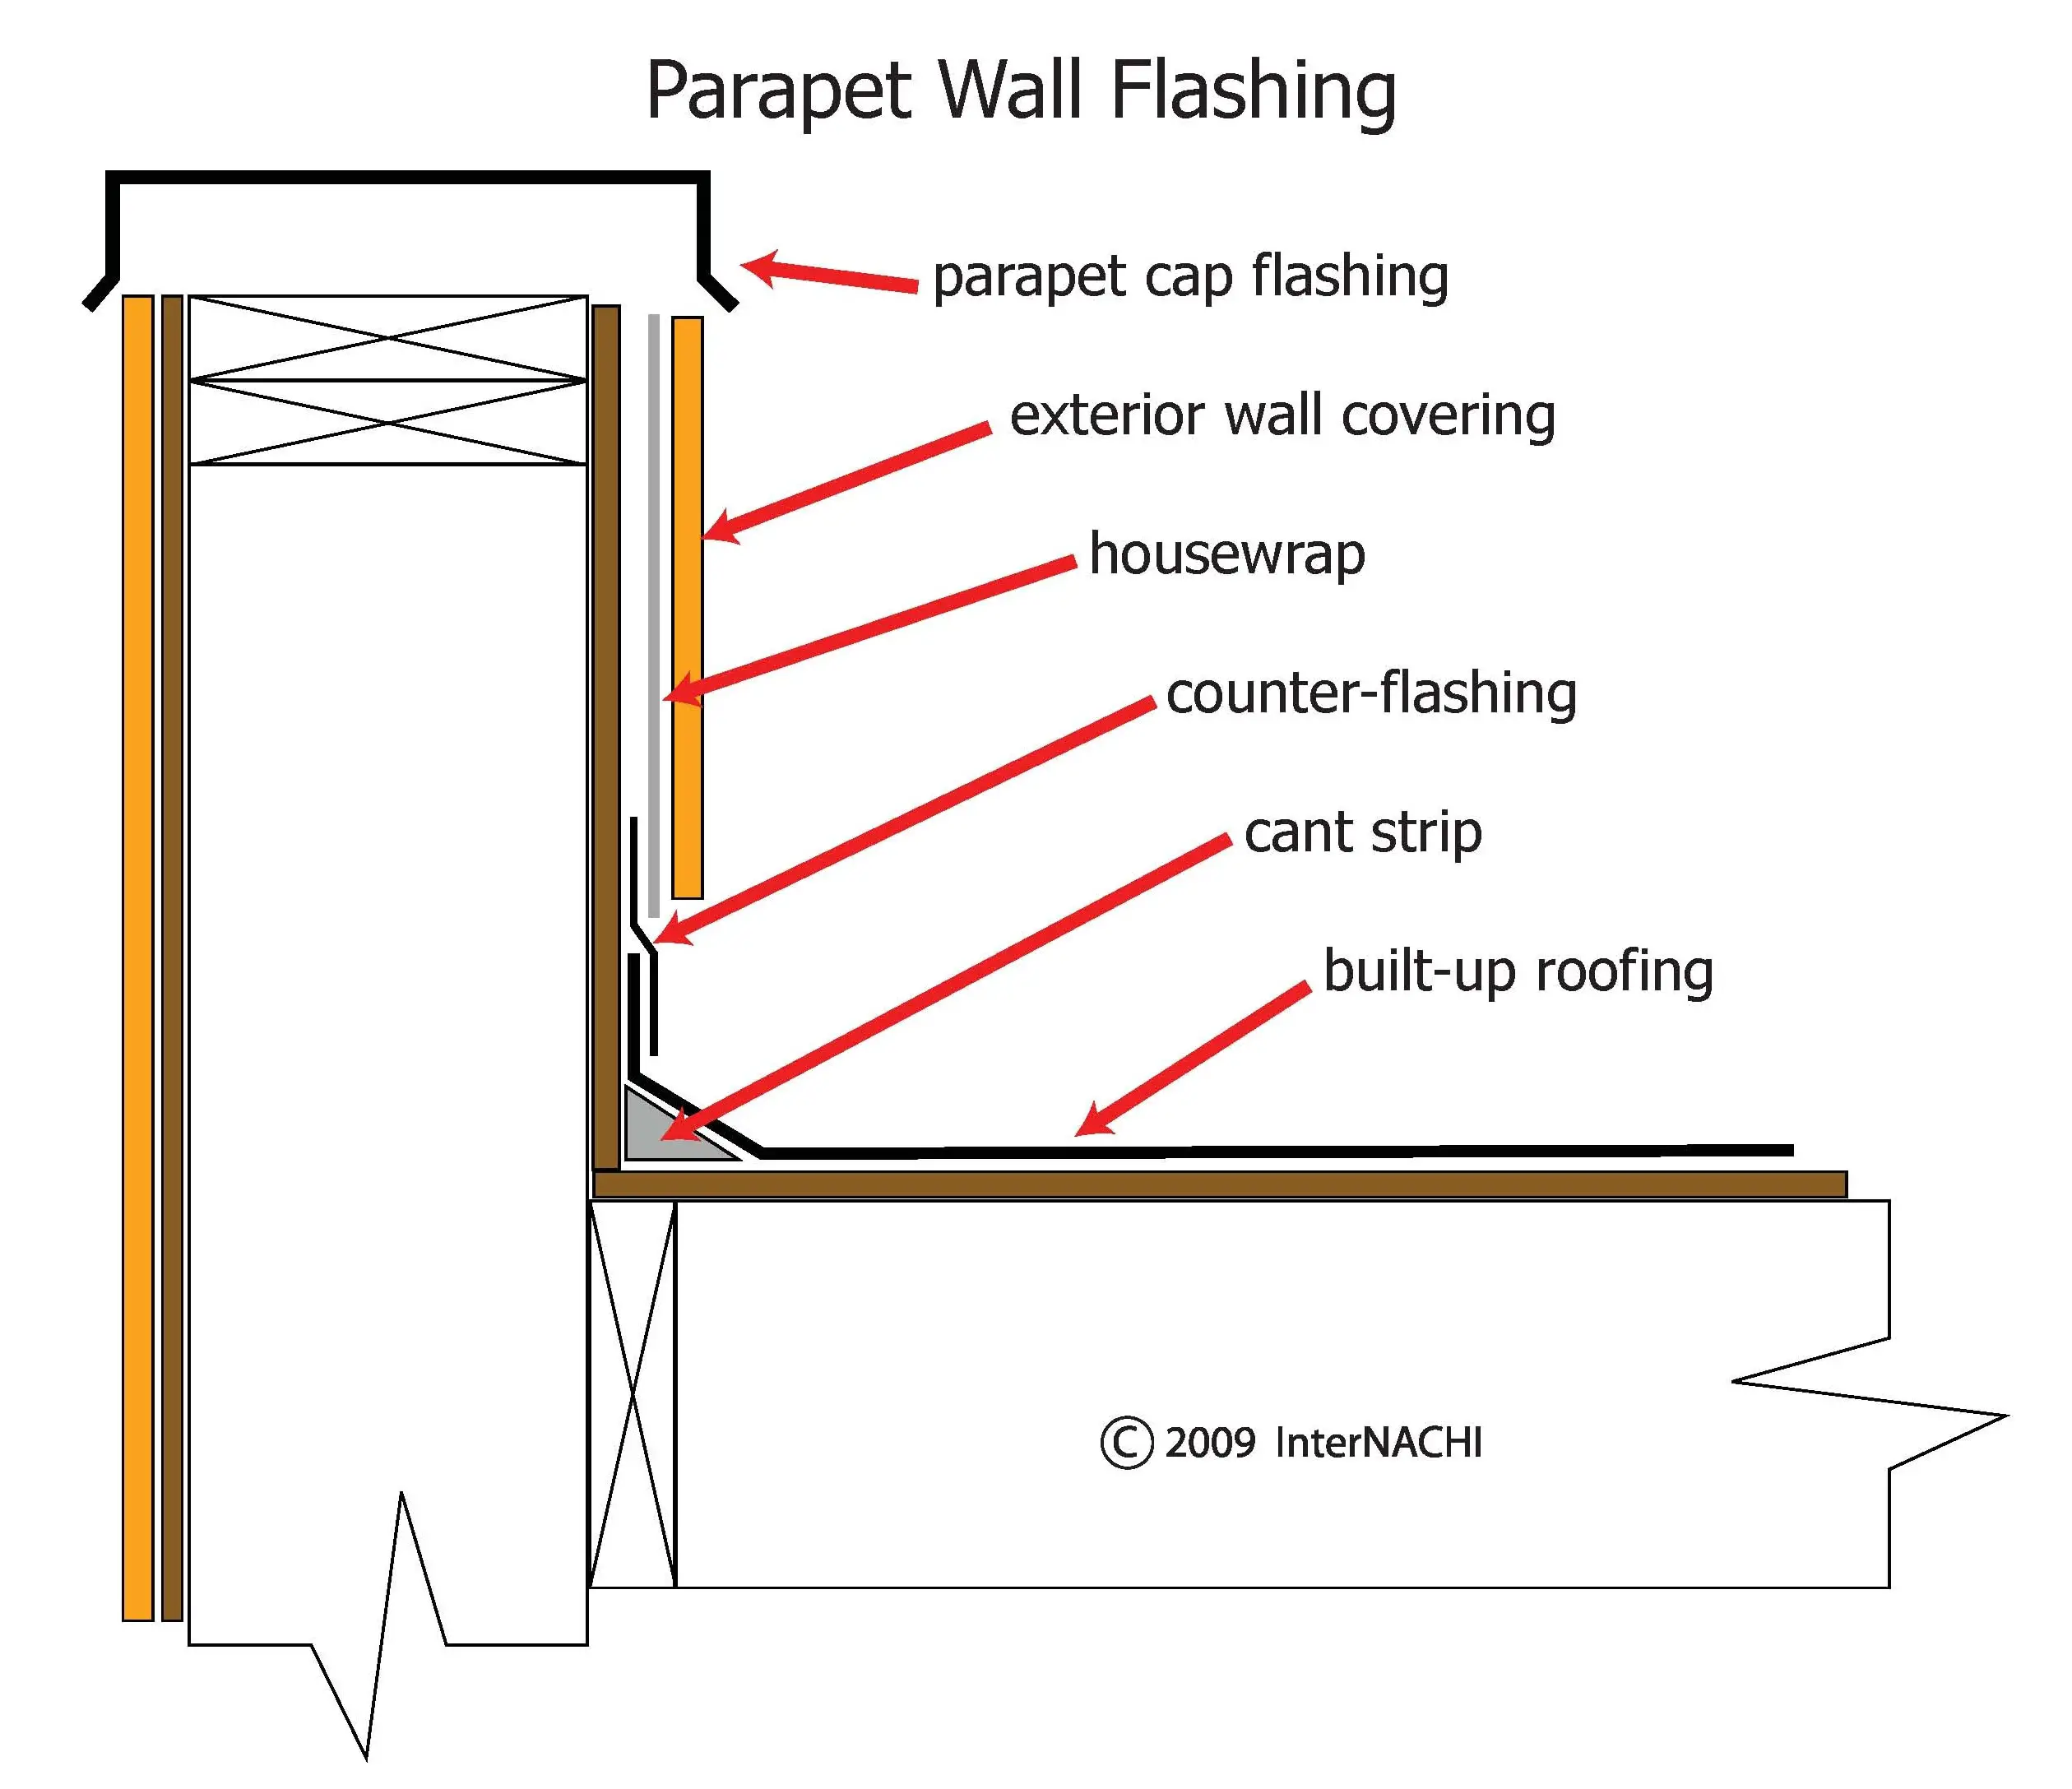 Parapet Wall Flashing